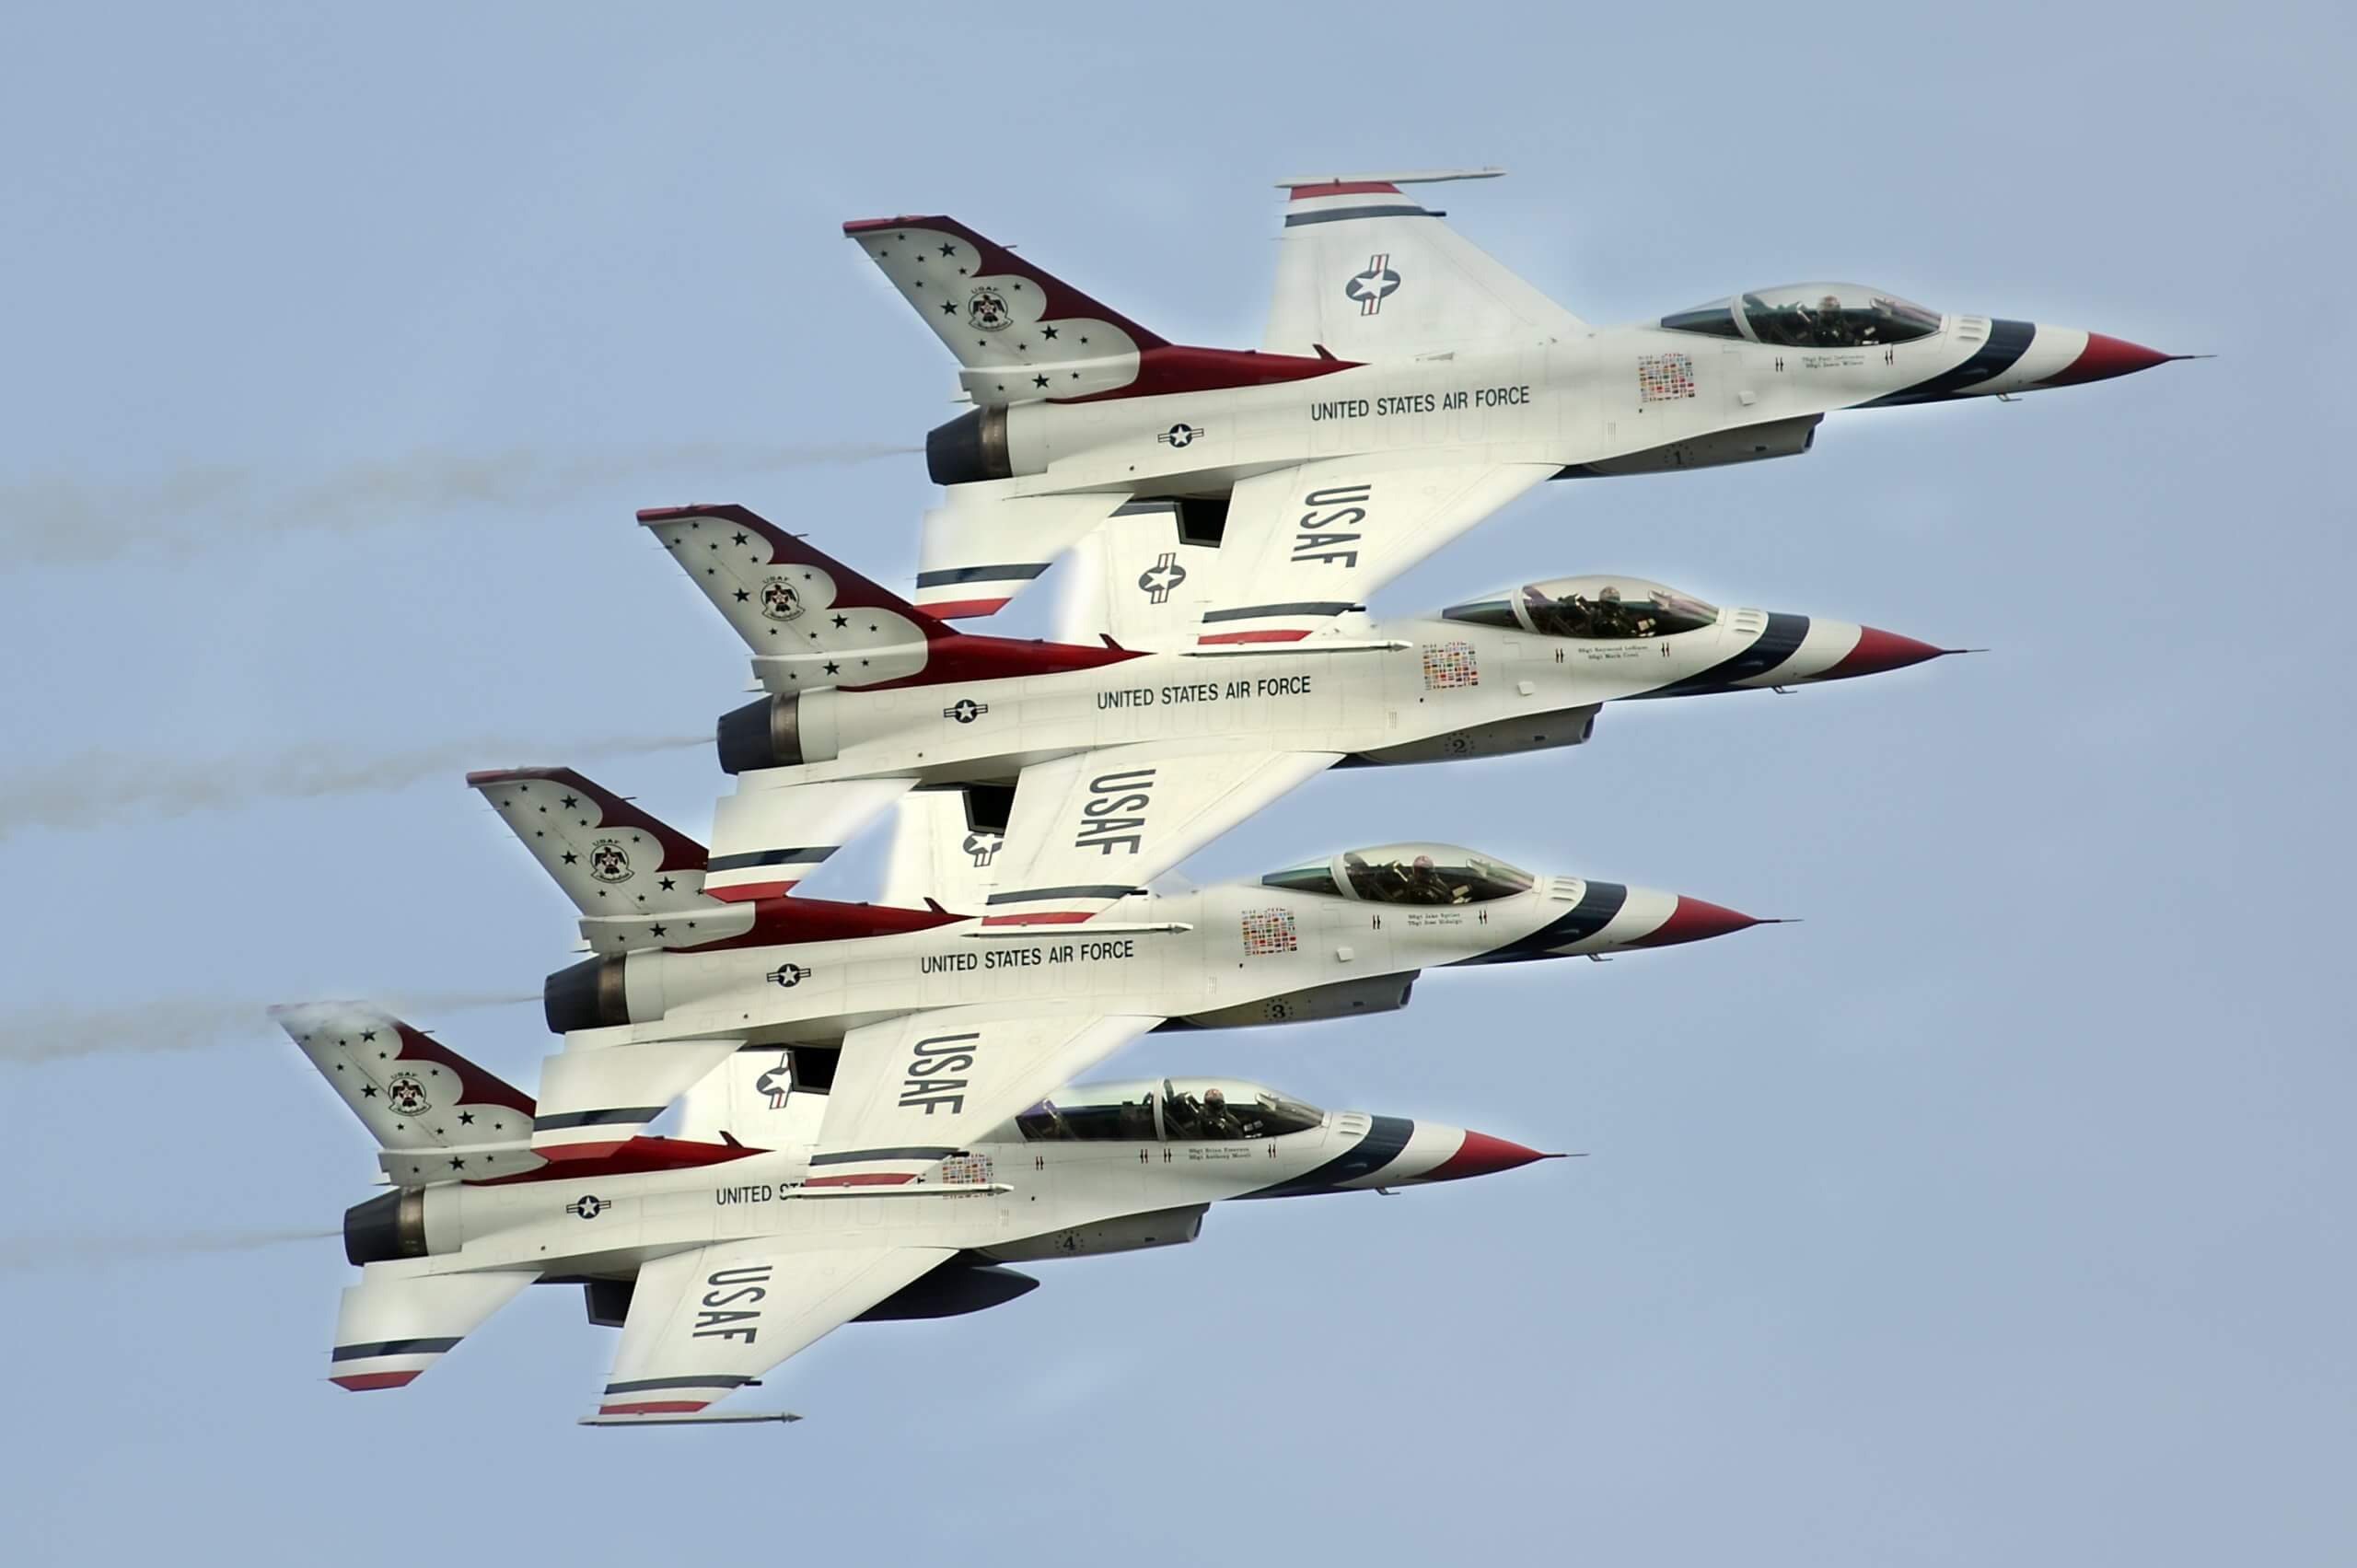 U.S. Air force Thunderbirds demonstration team